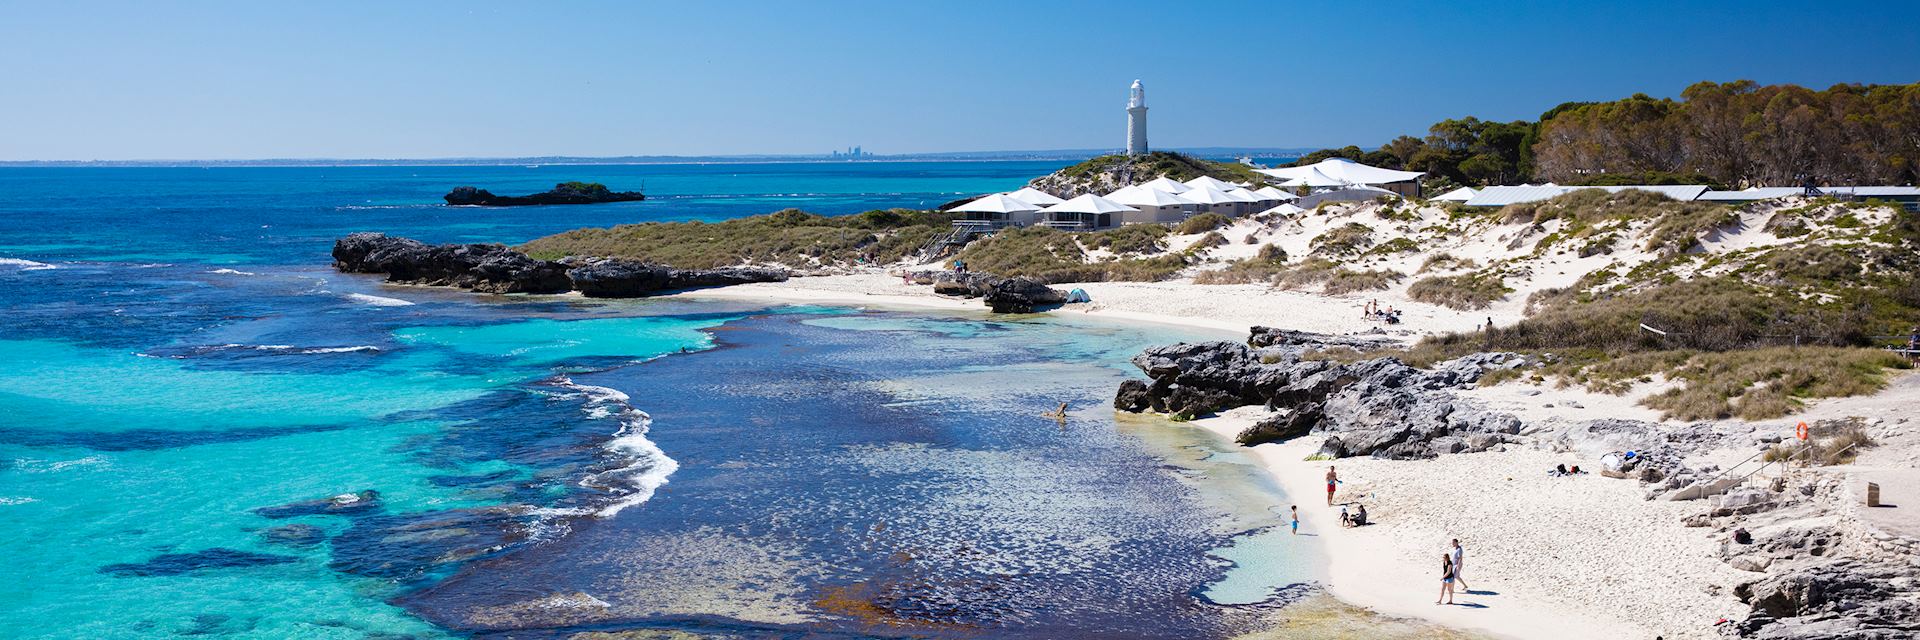 Rottnest Island in western Australia